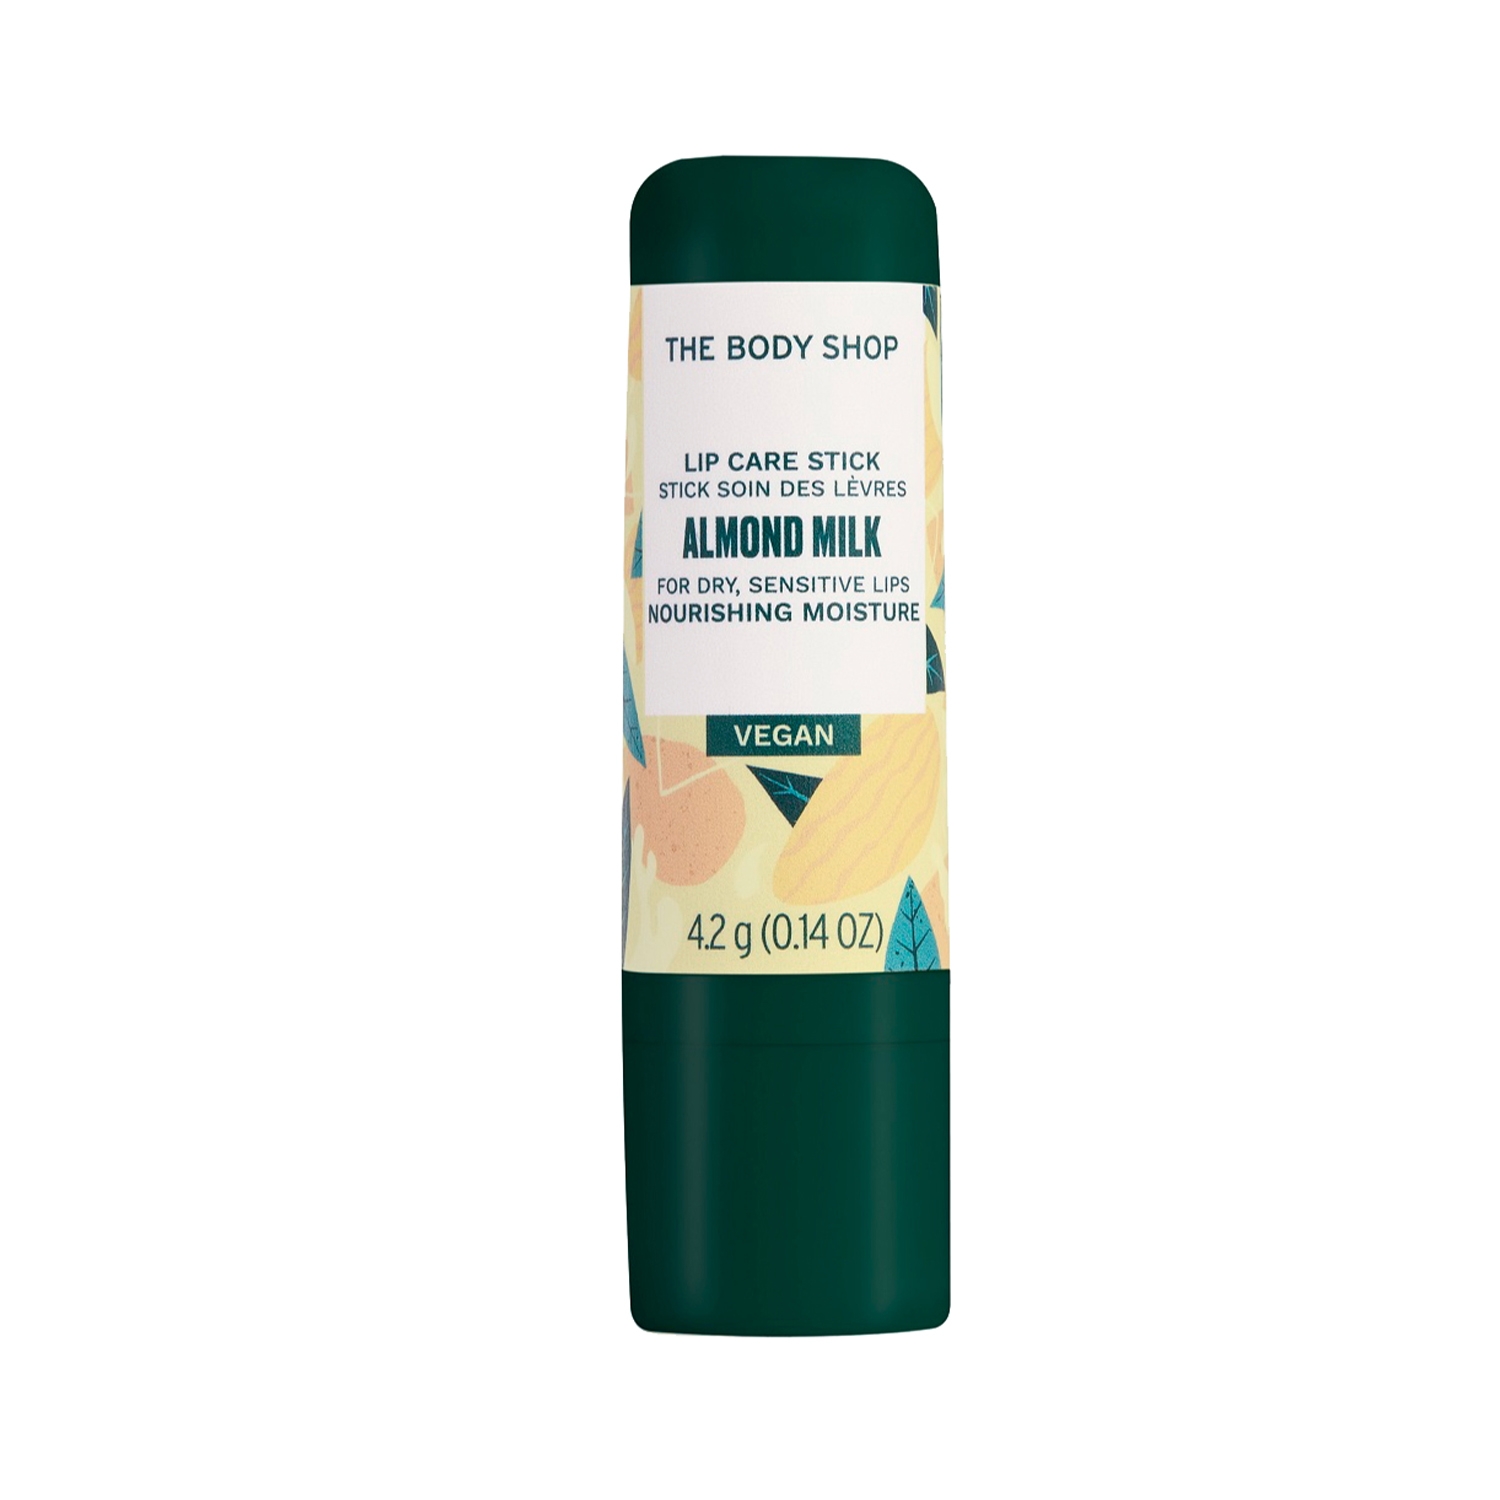 The Body Shop | The Body Shop Almond Milk Lip Care Stick (4.2g)